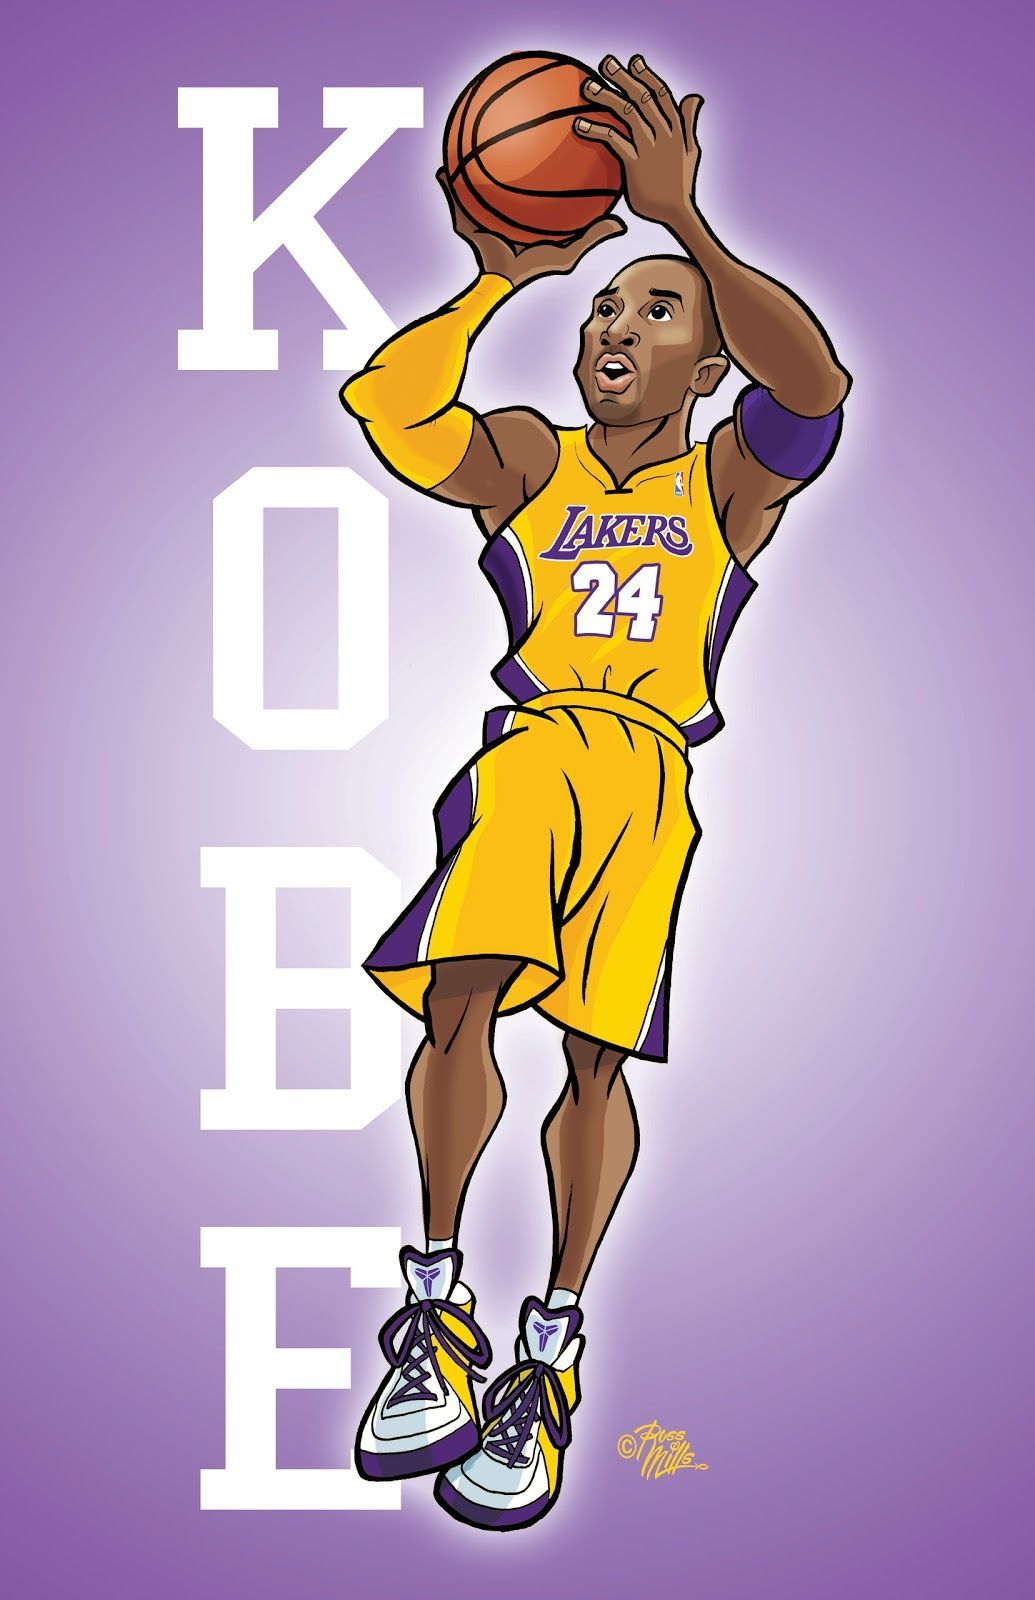 Kobe Bryant. Kobe bryant wallpaper, Kobe bryant picture, Lakers kobe